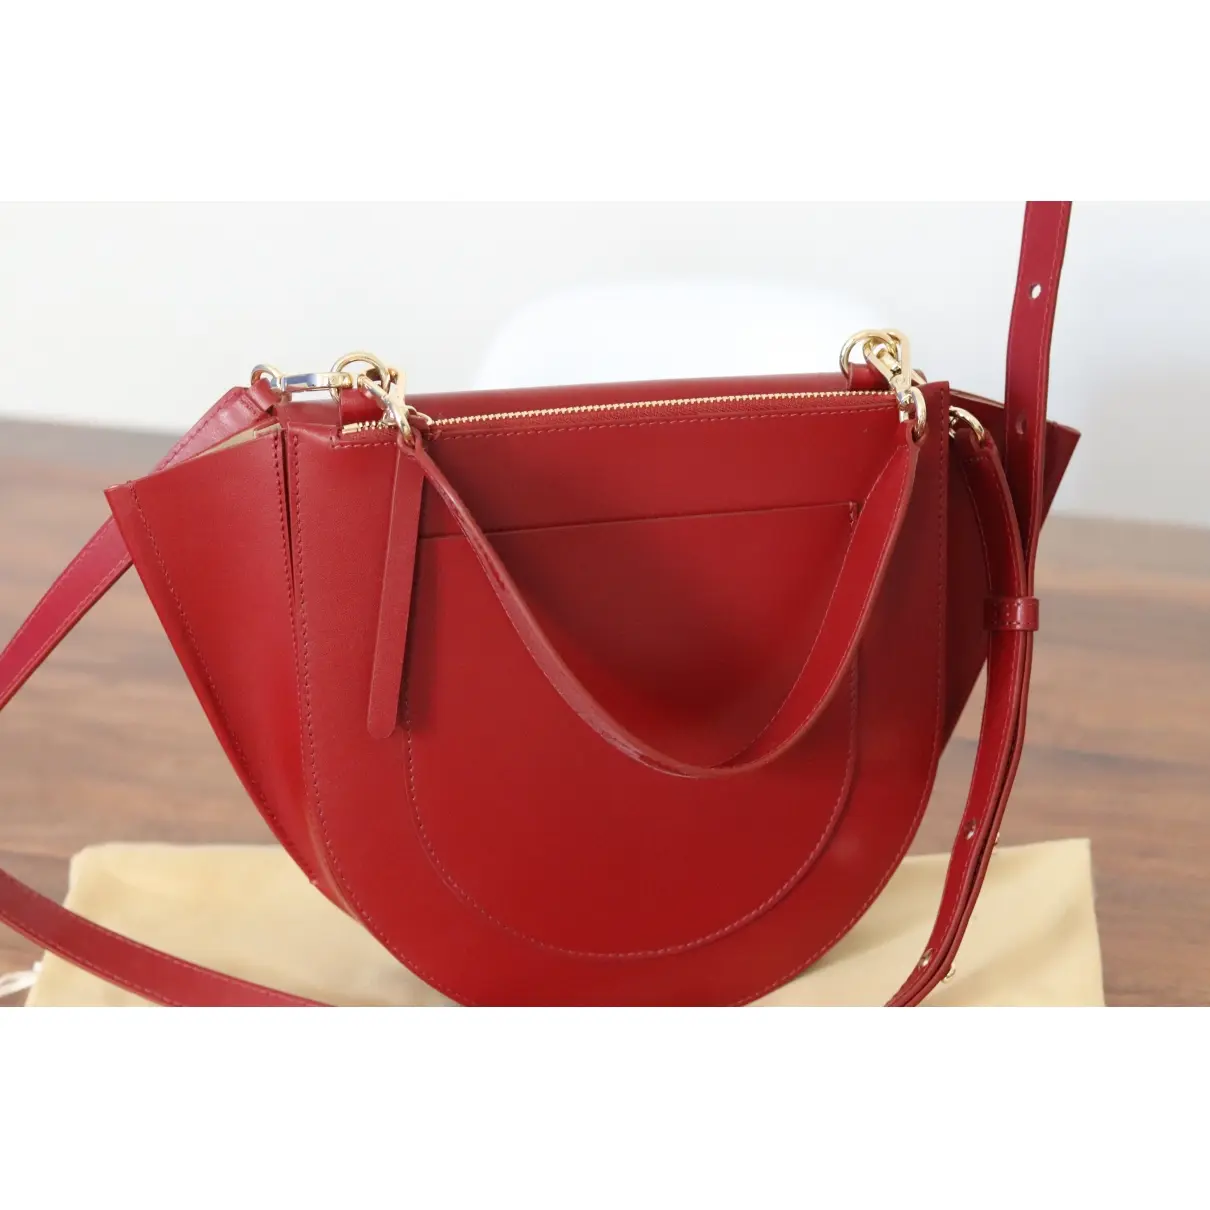 Wandler Hortensia leather handbag for sale